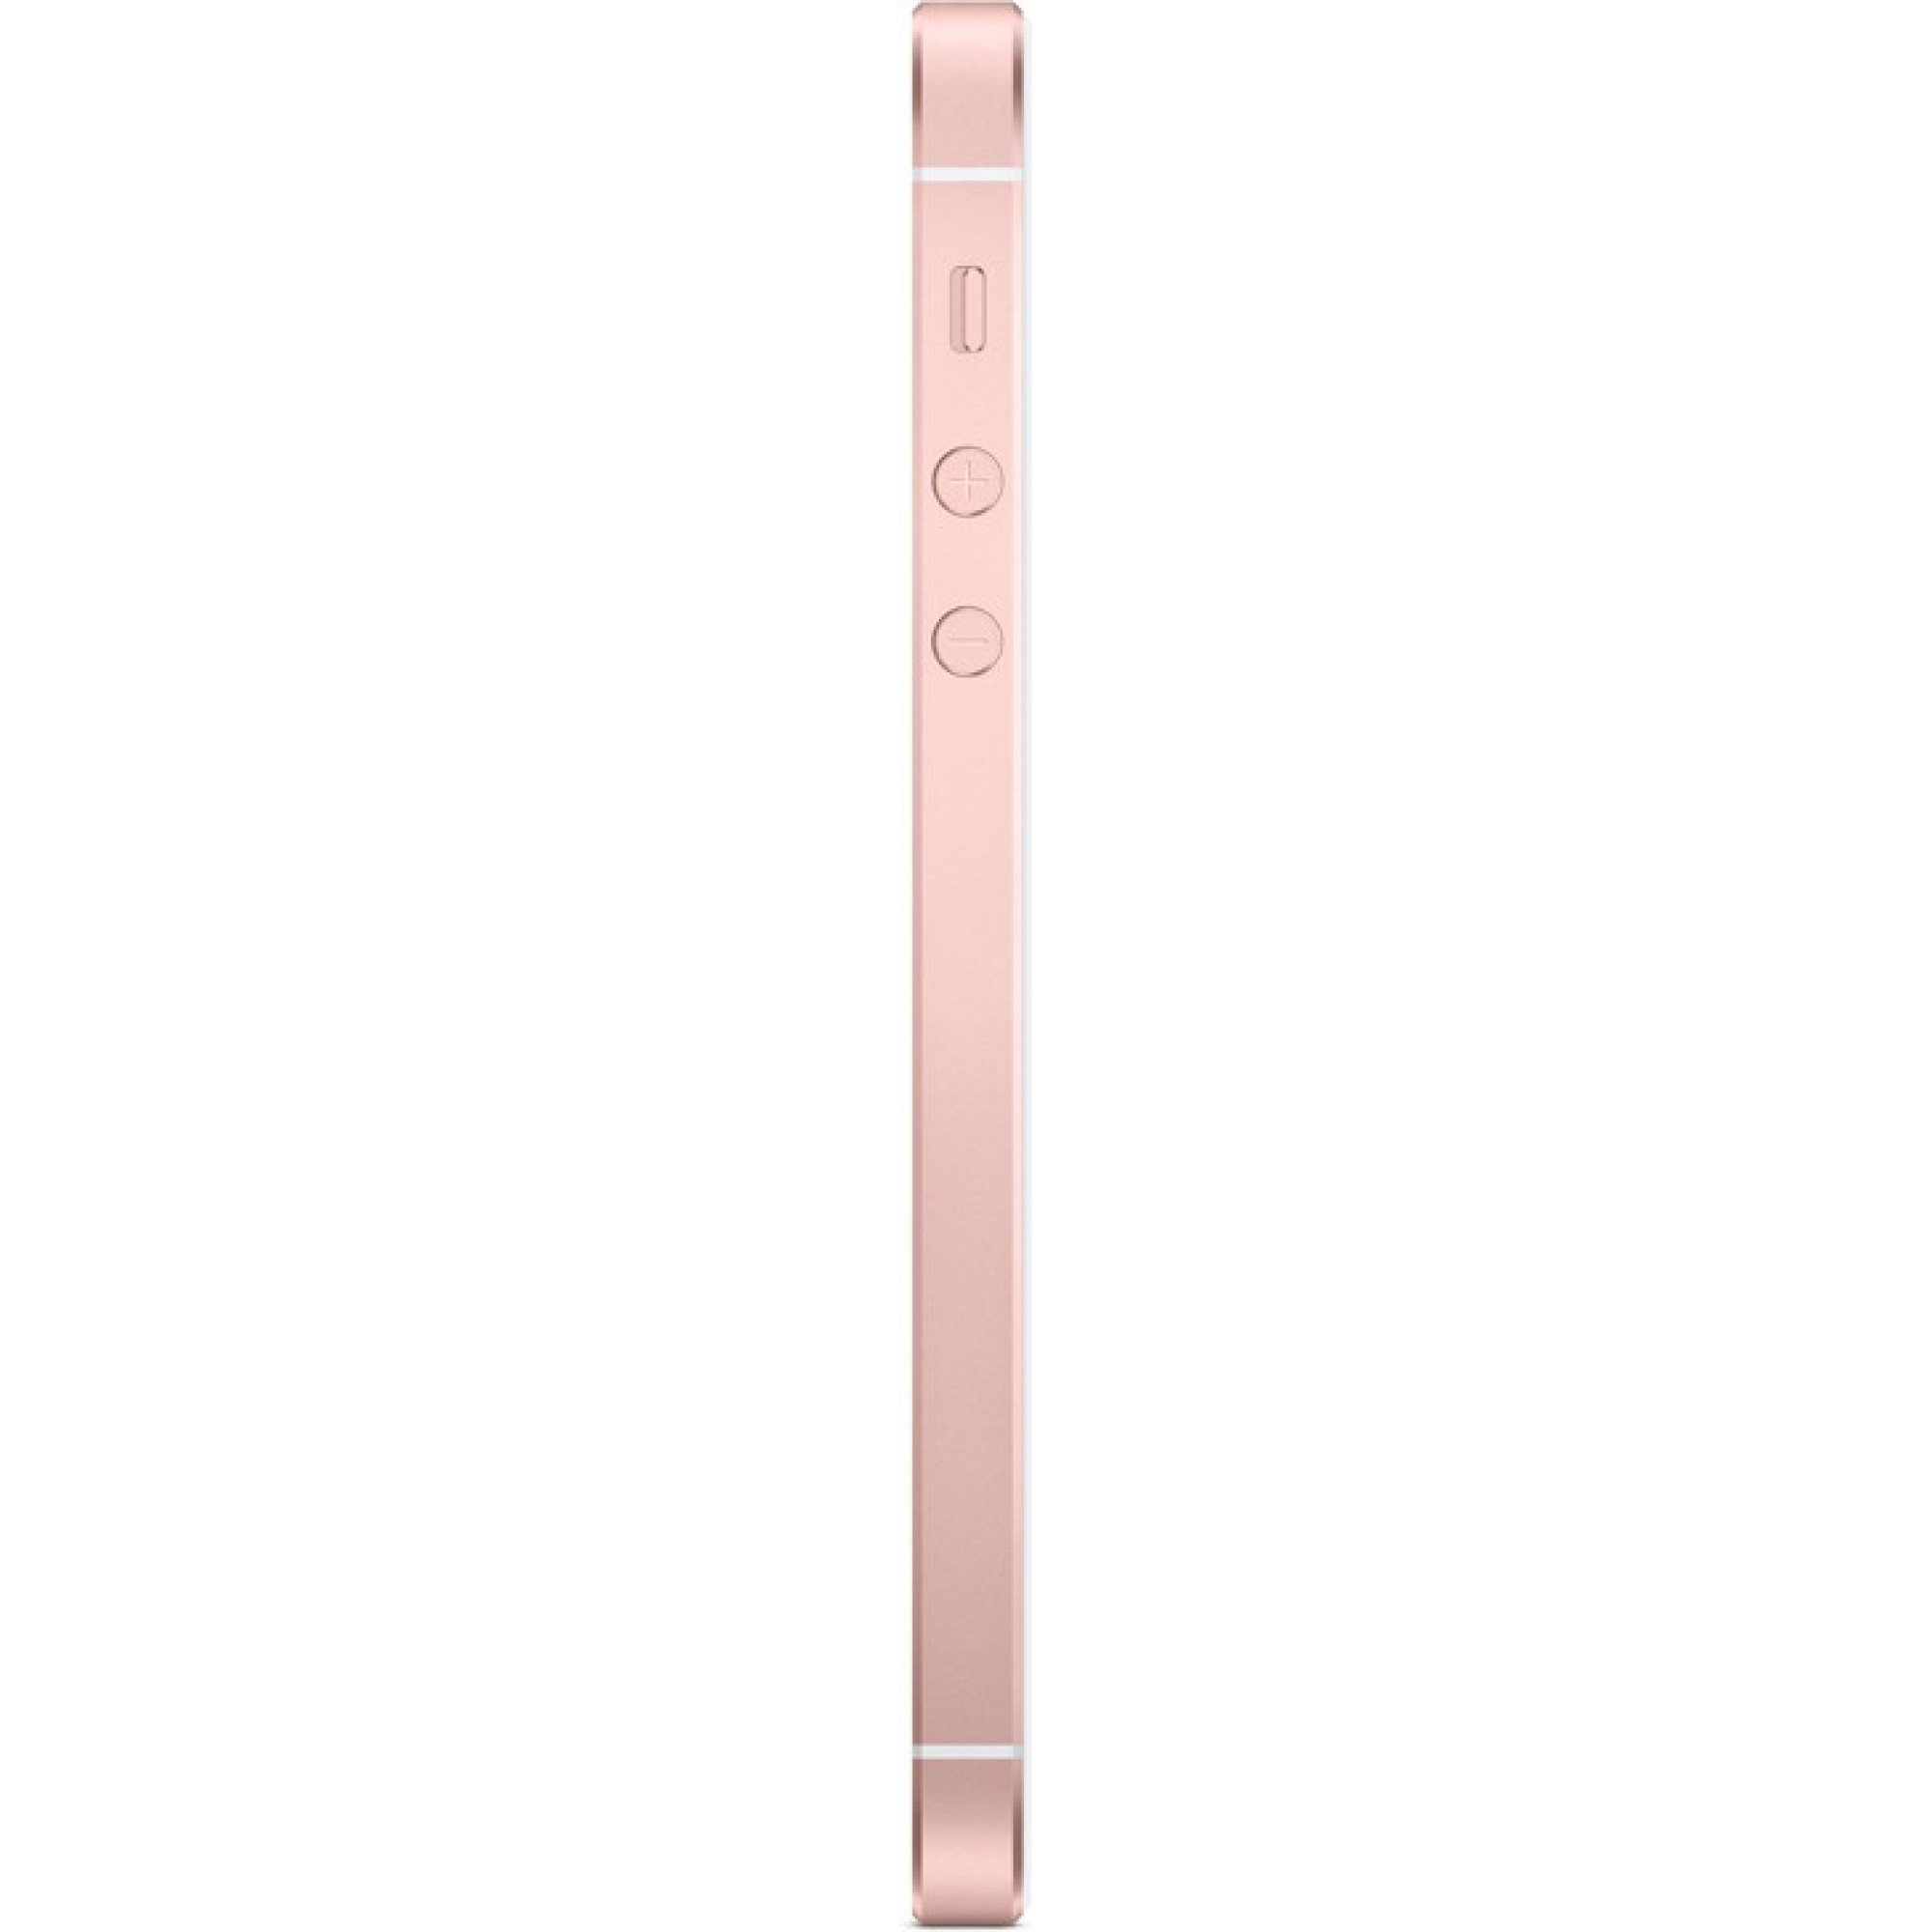 Apple iPhone 5 SE Refurbished Like New 3 Month Warranty  - 16GB, Silver